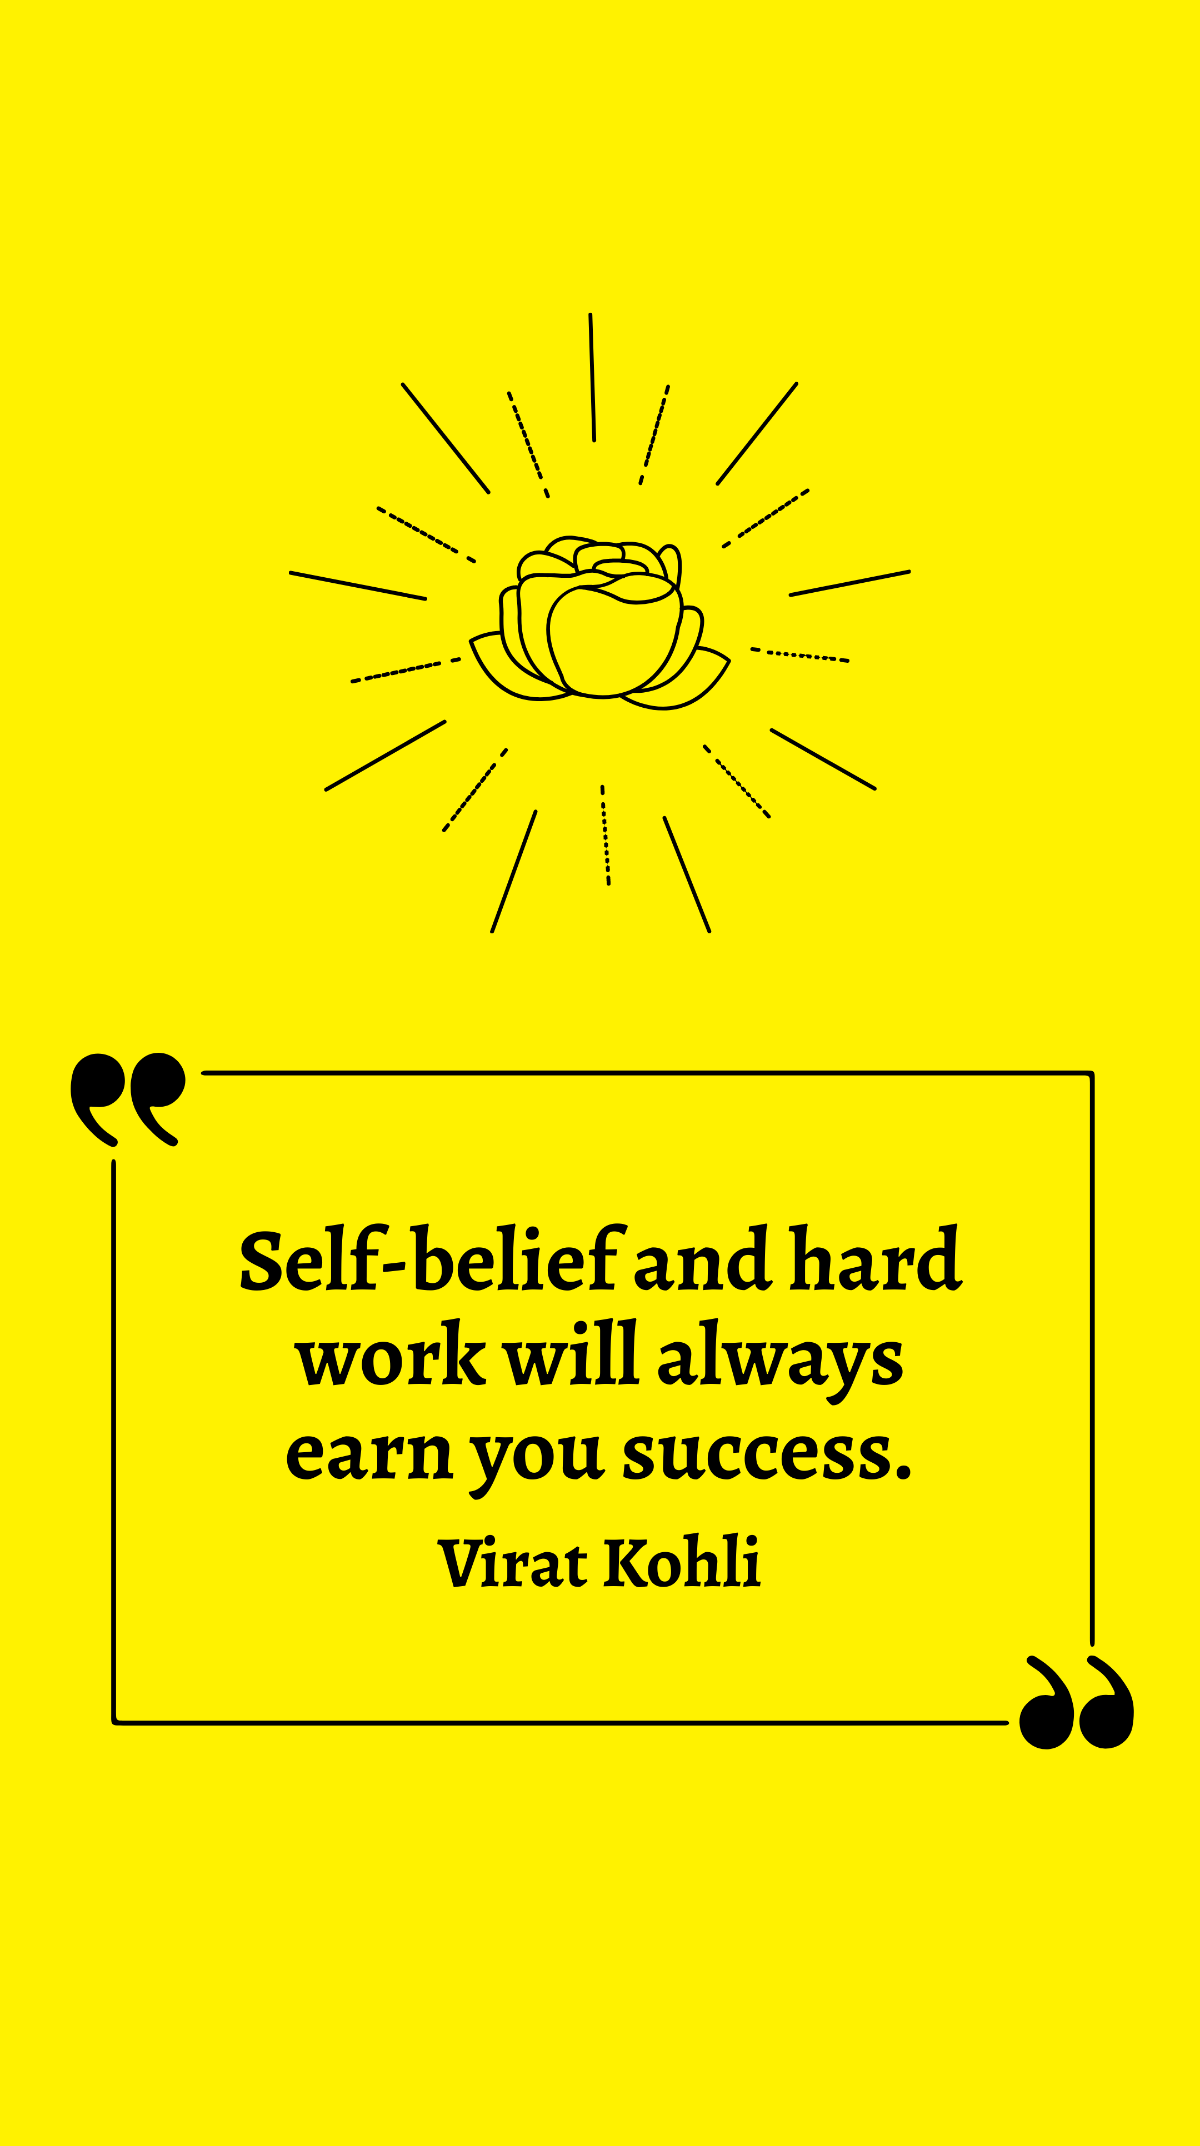 Virat Kohli - Self-belief and hard work will always earn you success. Template